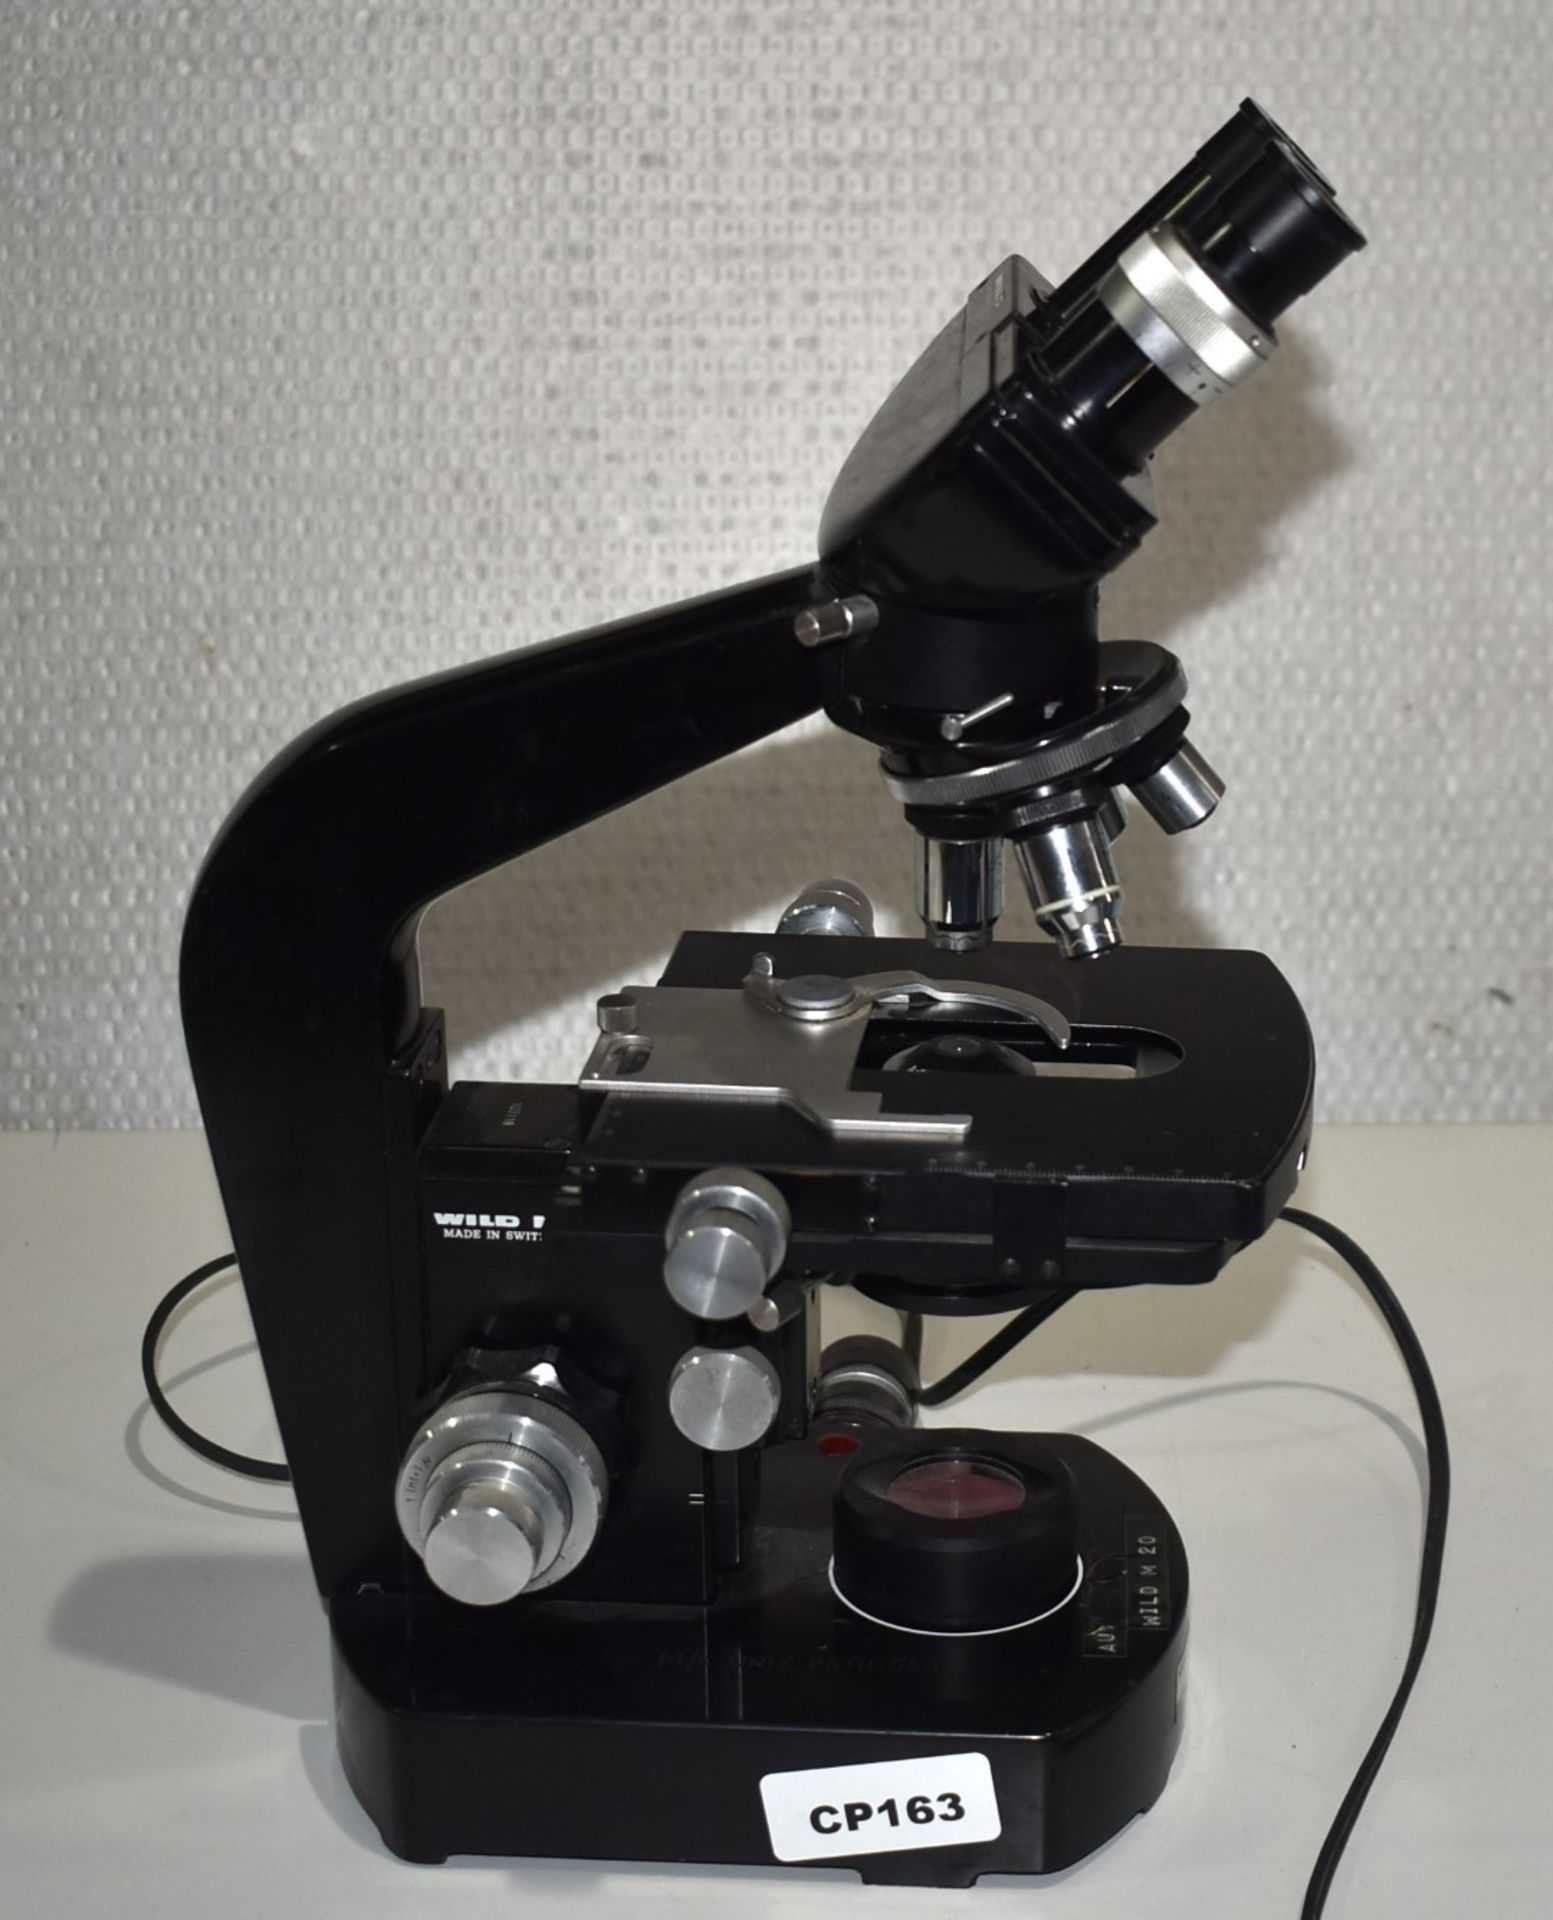 1 x Wild M20 Microscope CP163 - Image 20 of 22